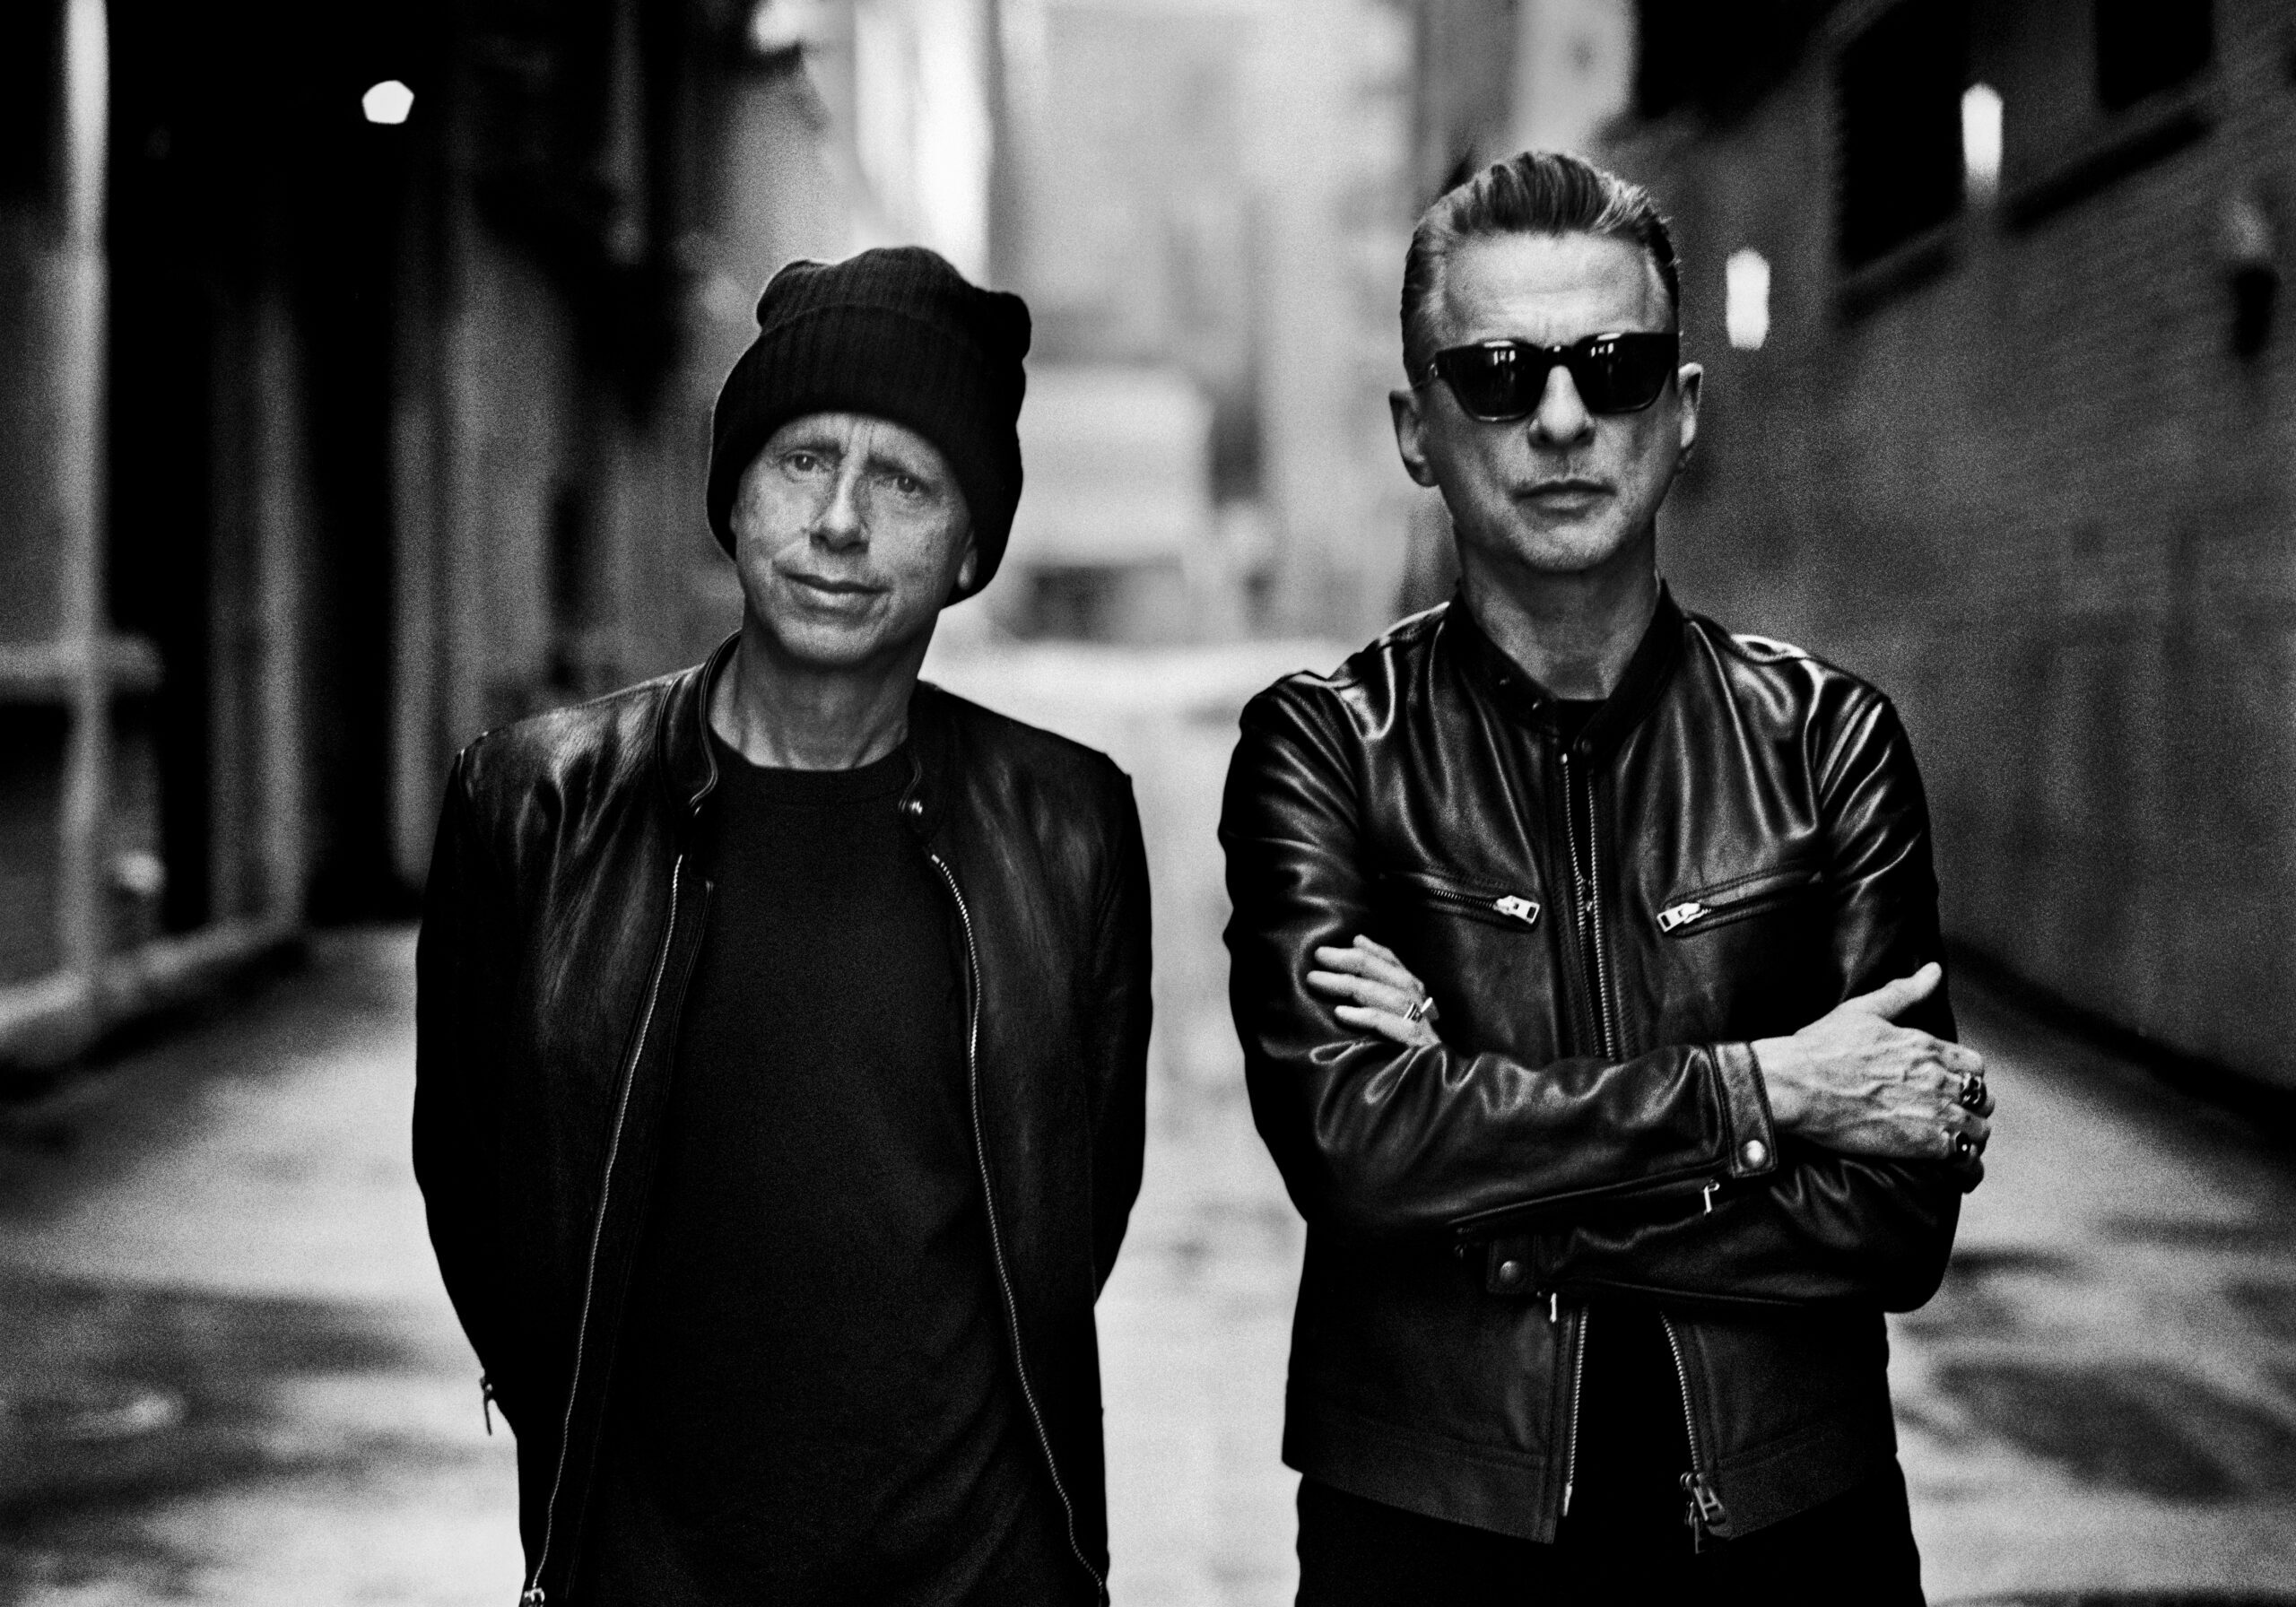 Depeche Mode Drops 'Ghosts Again,' Confirms New Album Release Date